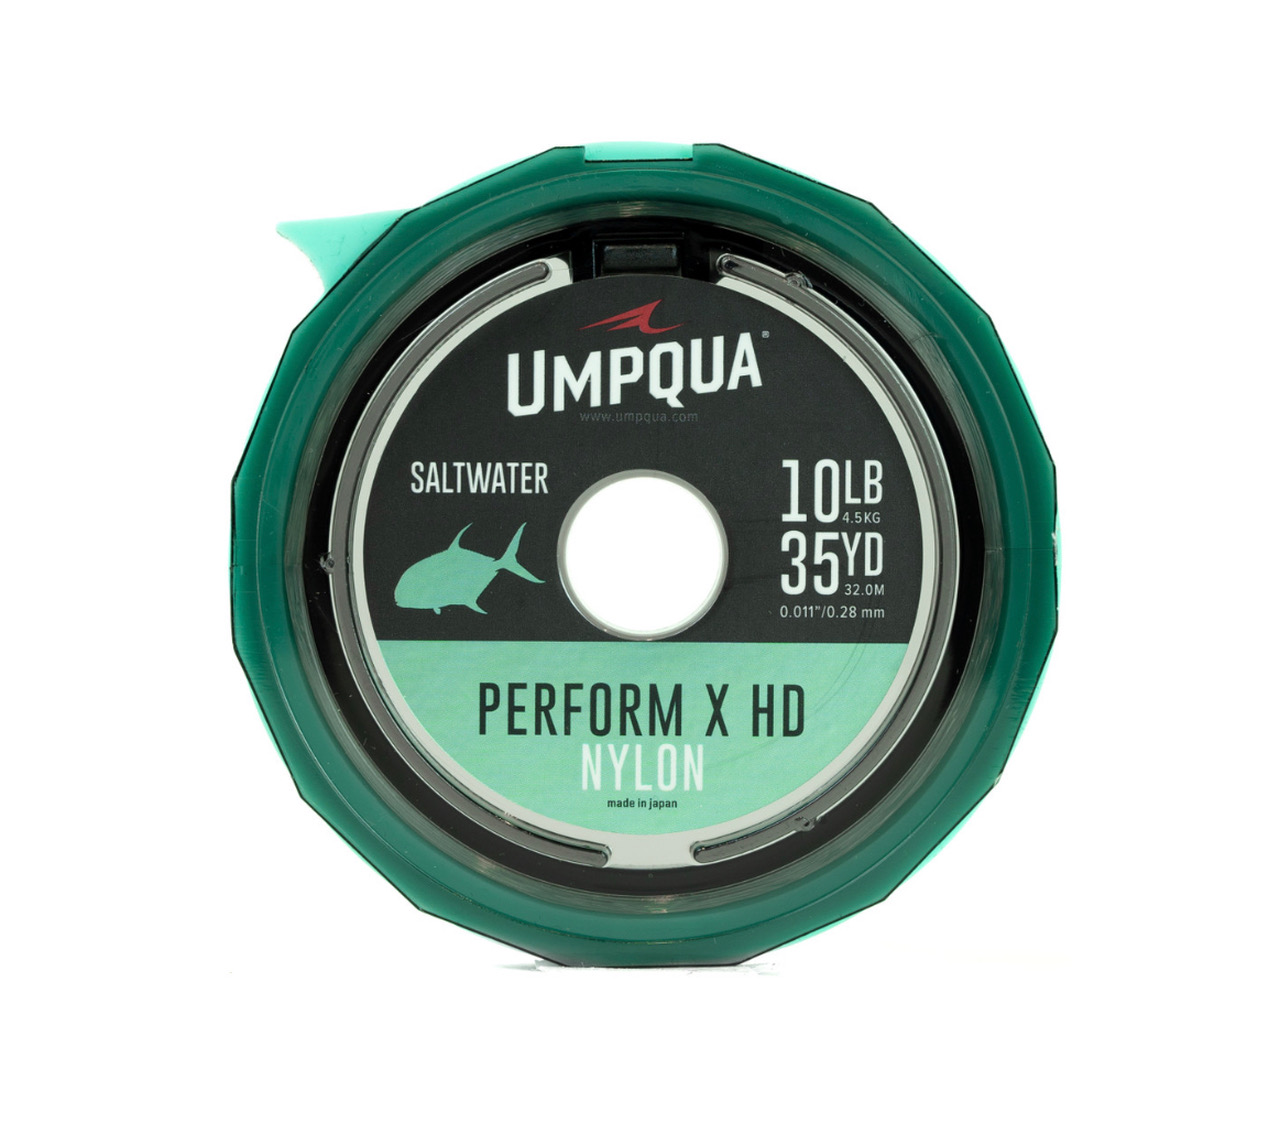 Umpqua Perform X HD Saltwater Nylon Tippet - 15yd - 40lb